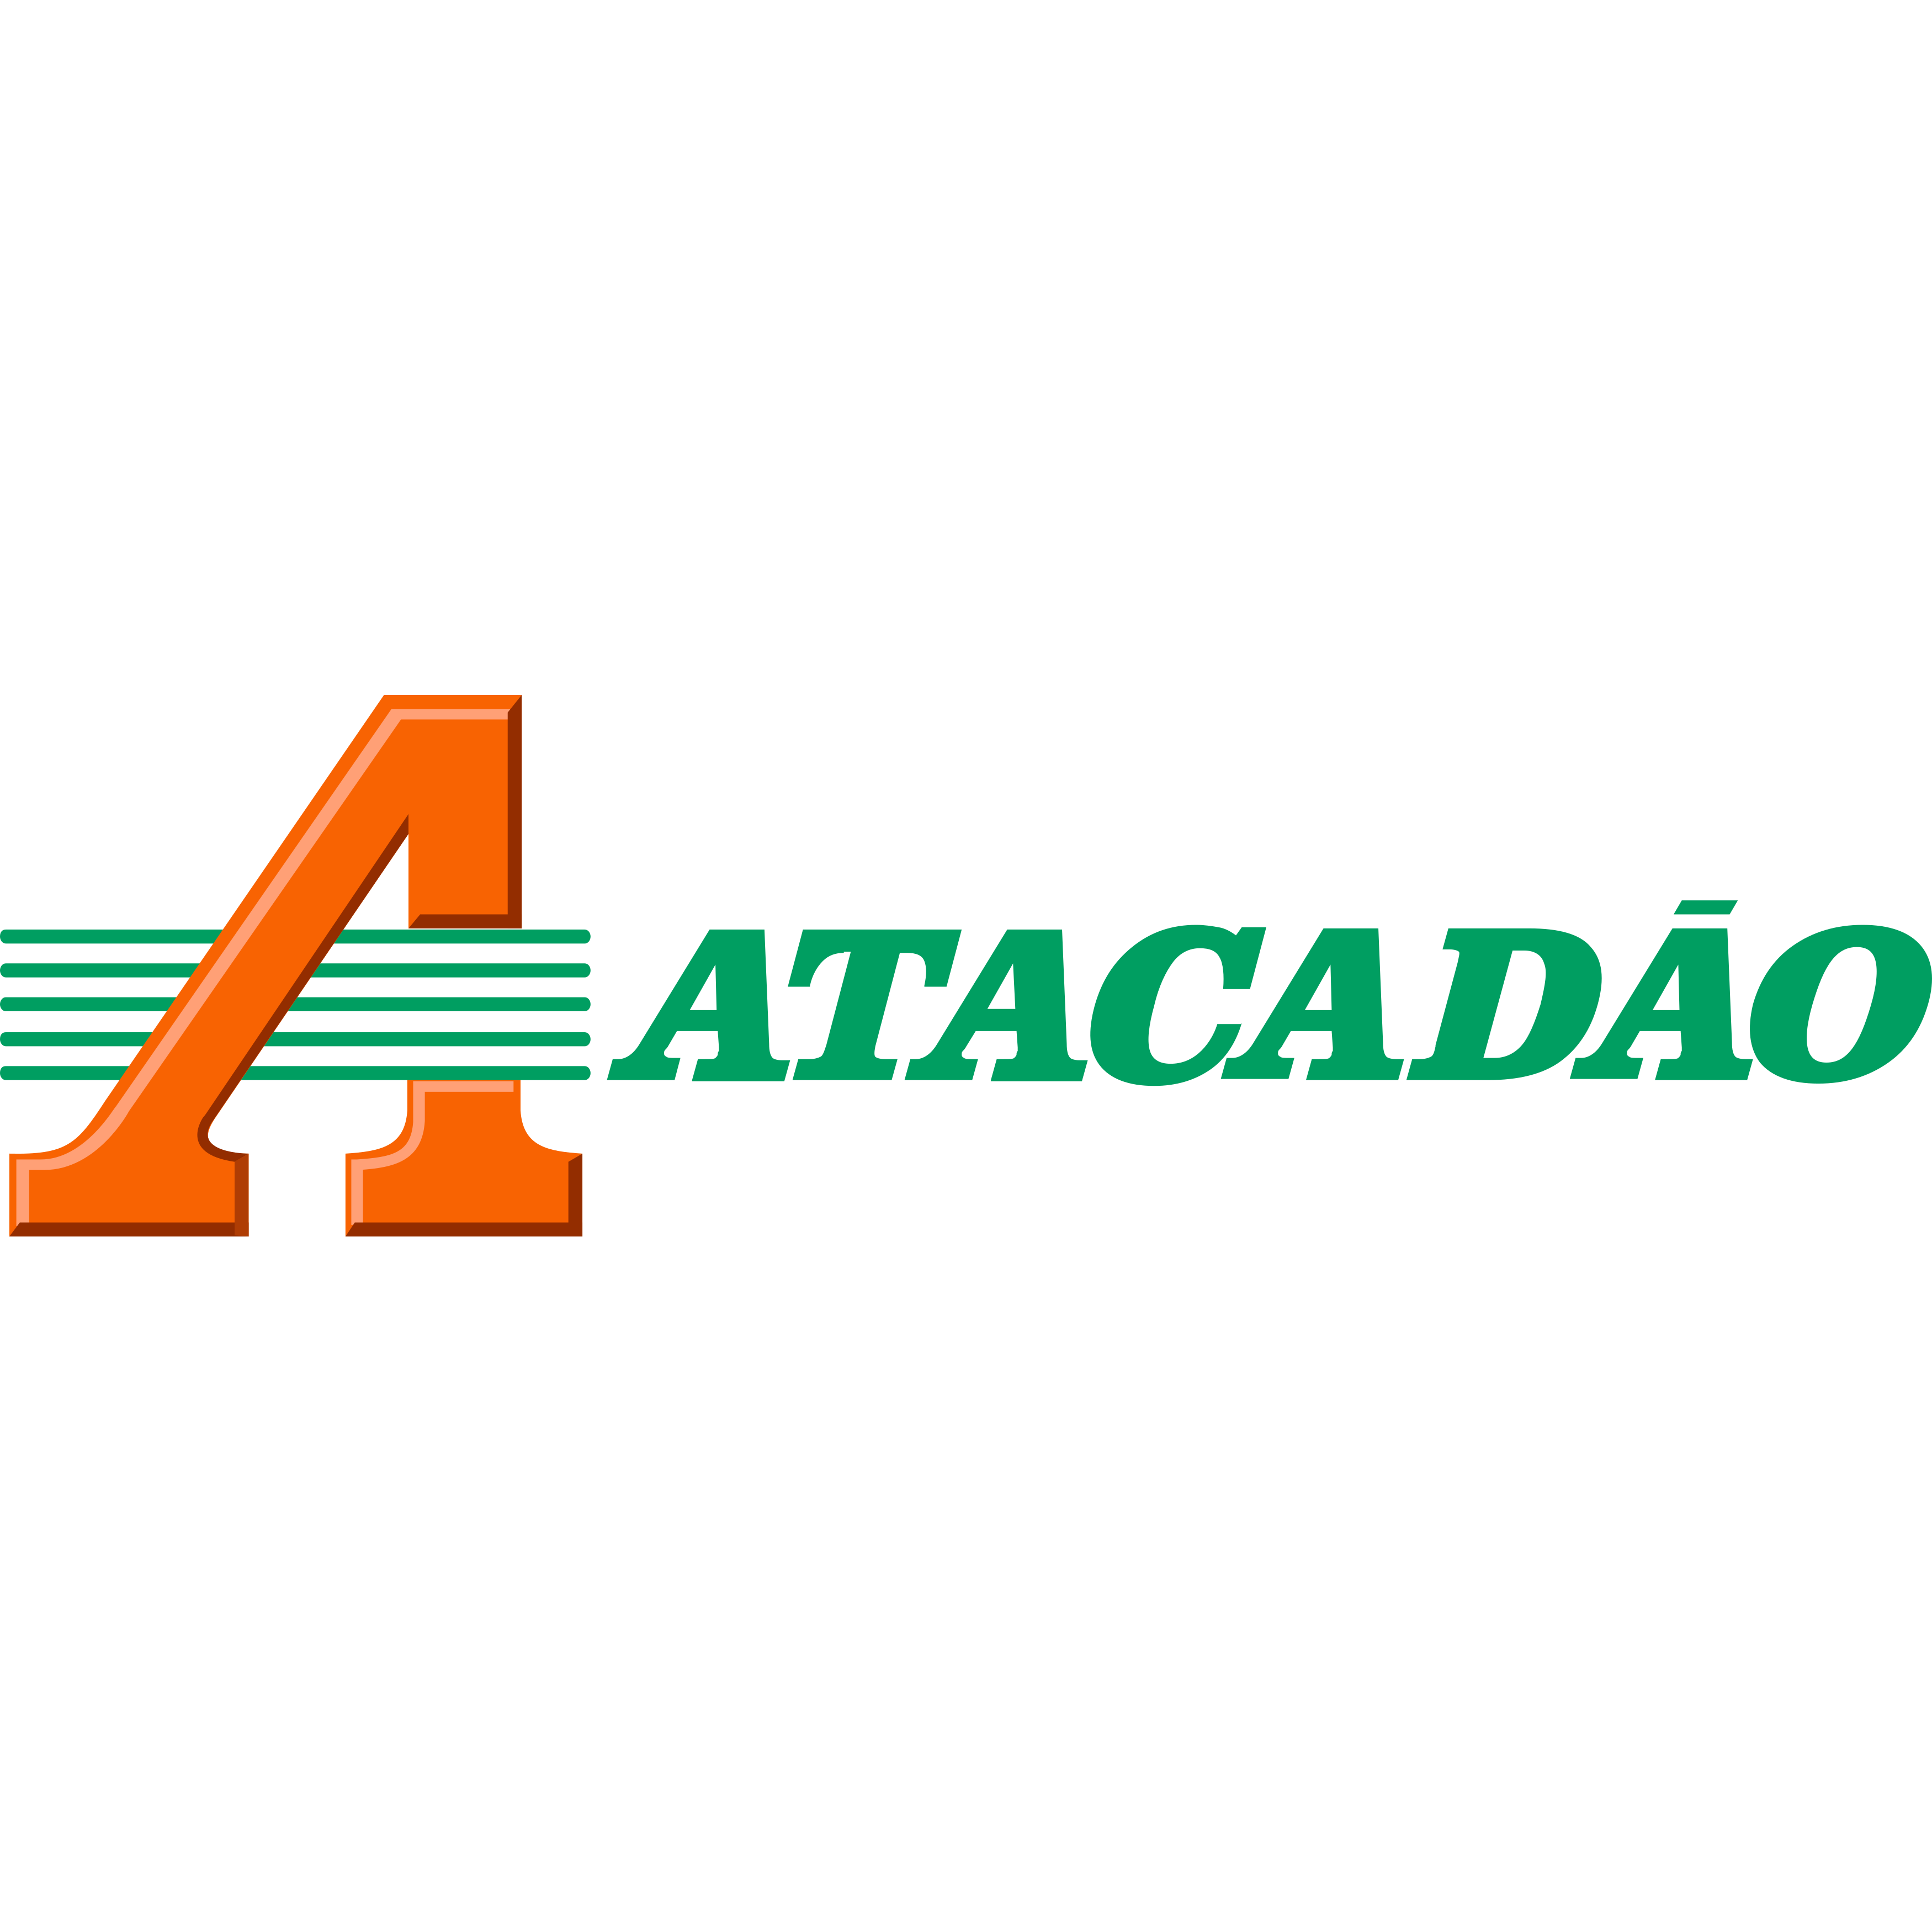 Logotipo da empresa Atacadão